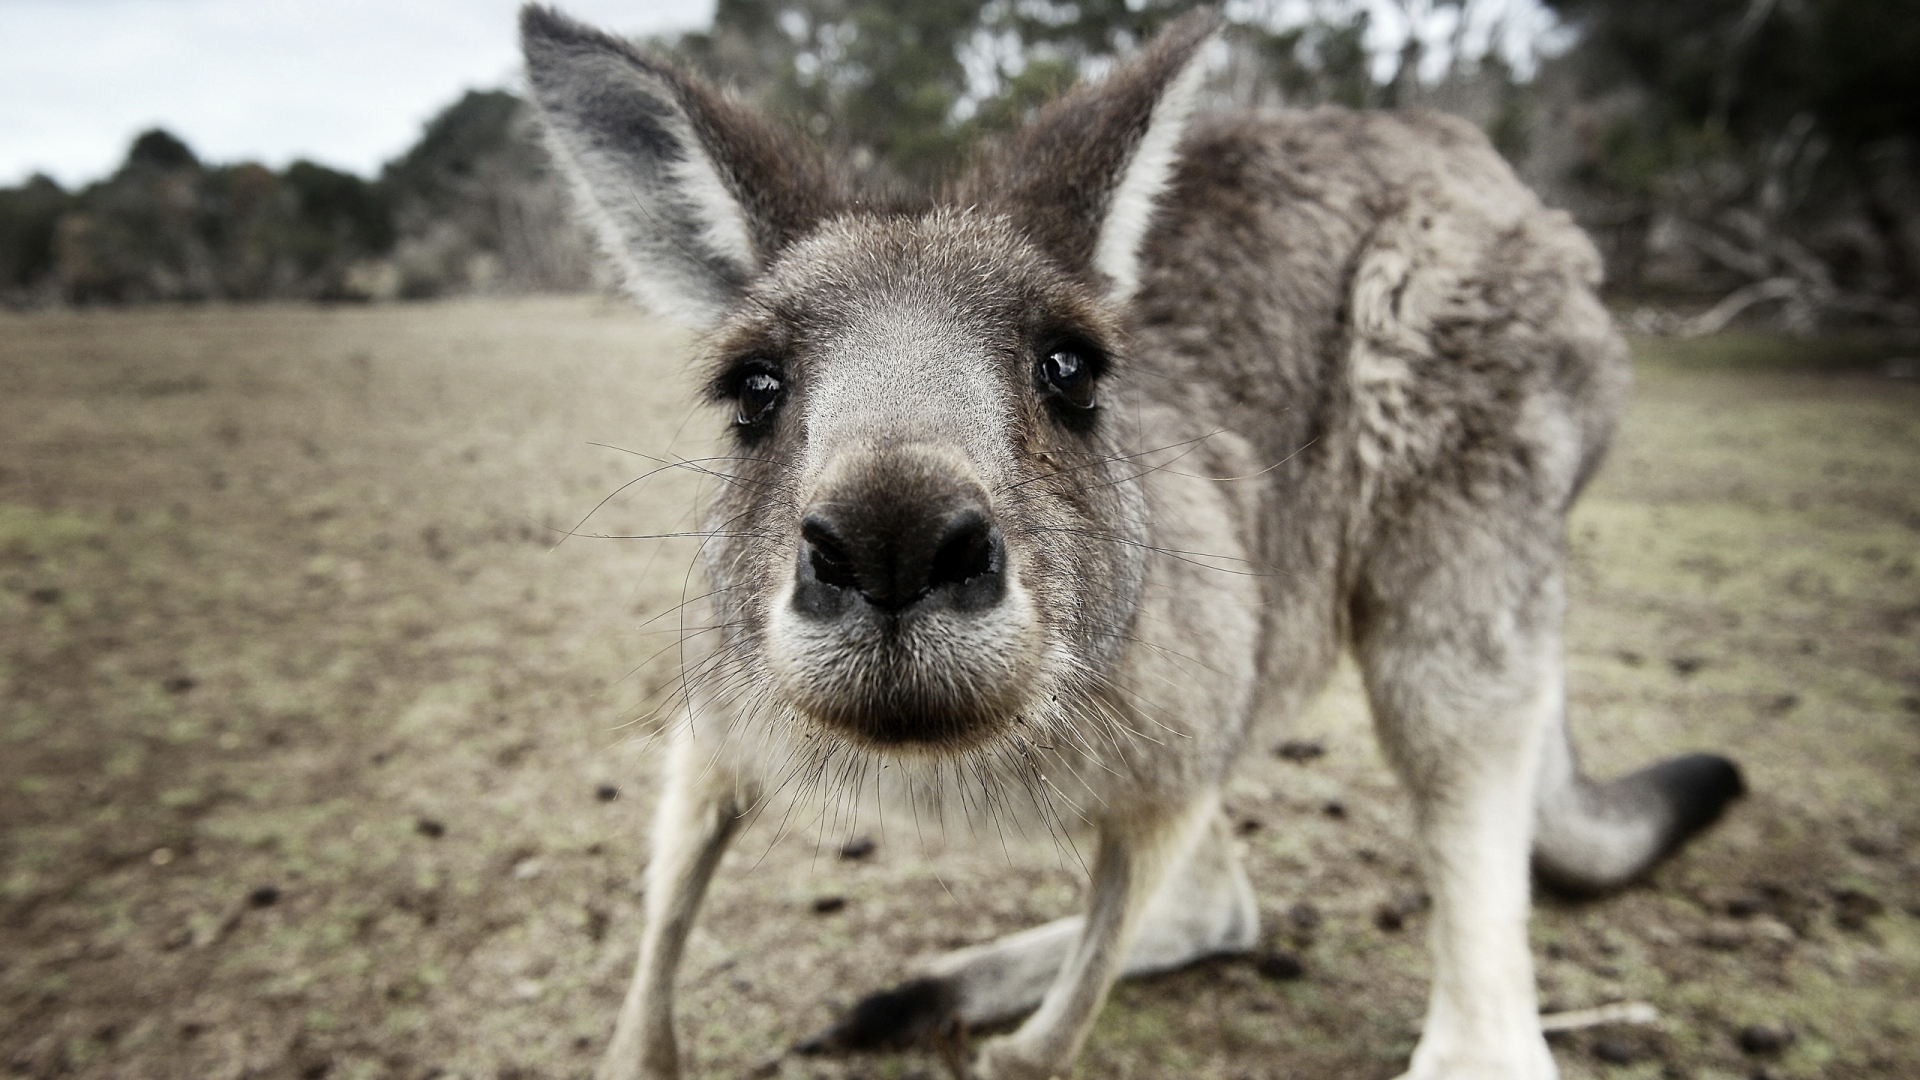 Kangaroo Close Up for 1920 x 1080 HDTV 1080p resolution